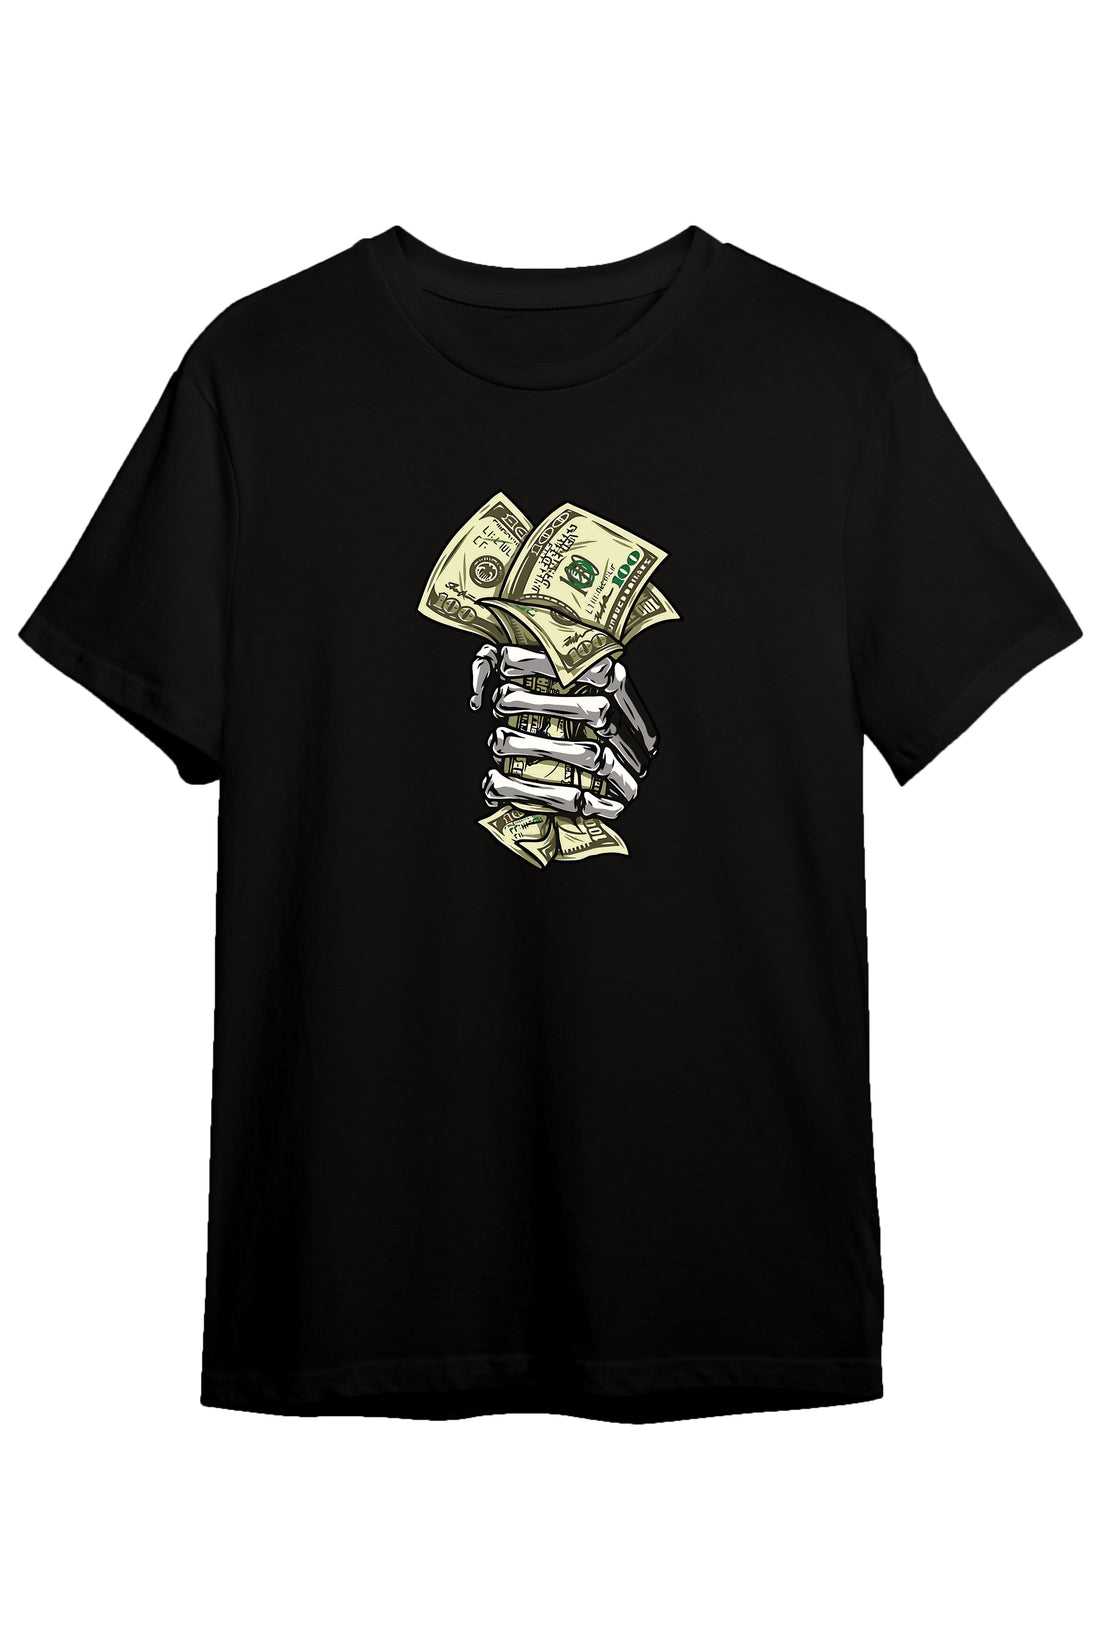 Money in Hand - Regular Tshirt